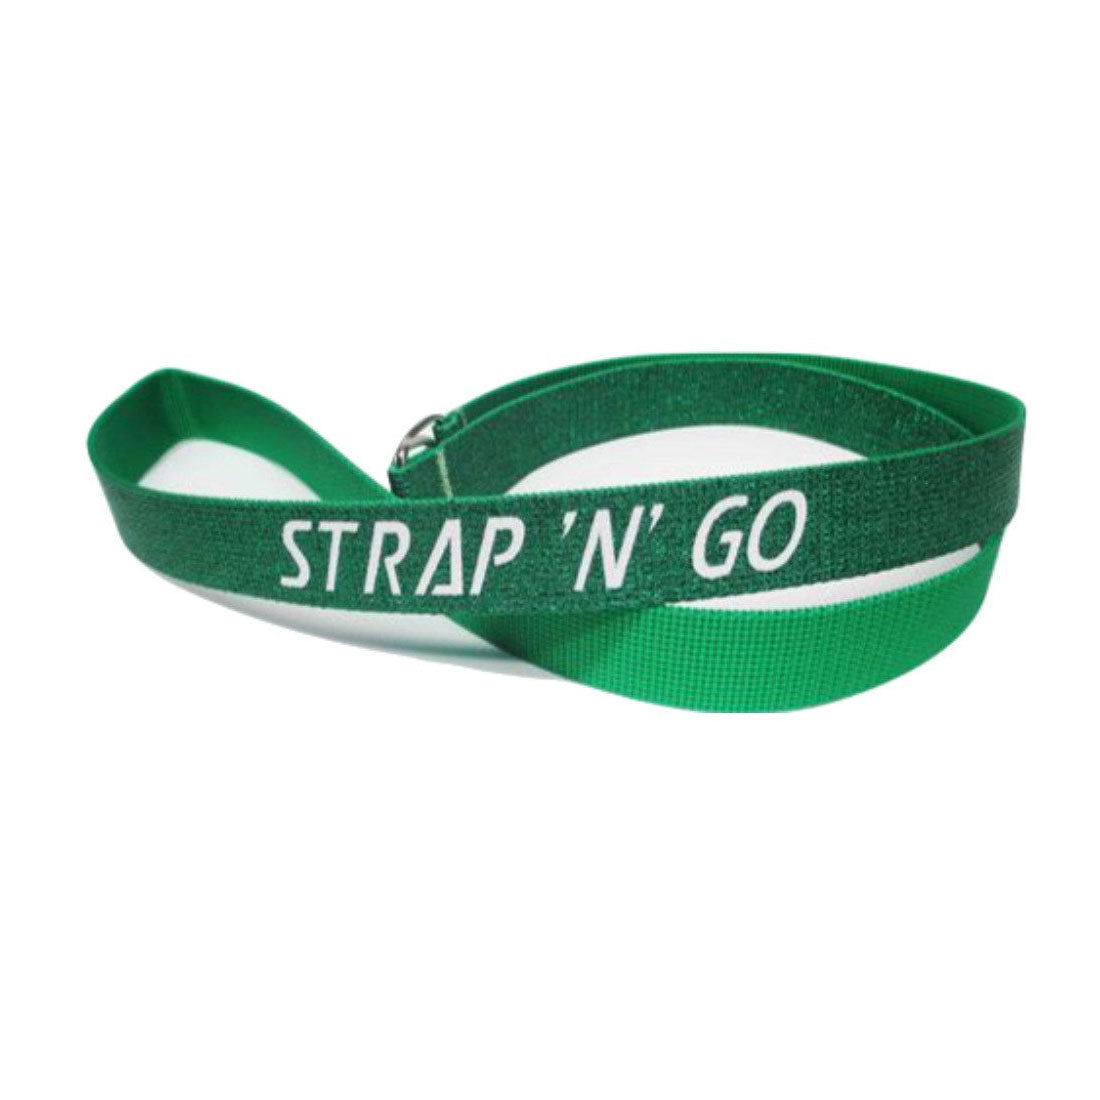 Strap N Go Skate Noose/Leash - Glitter Glitter Green Roller Skate Accessories